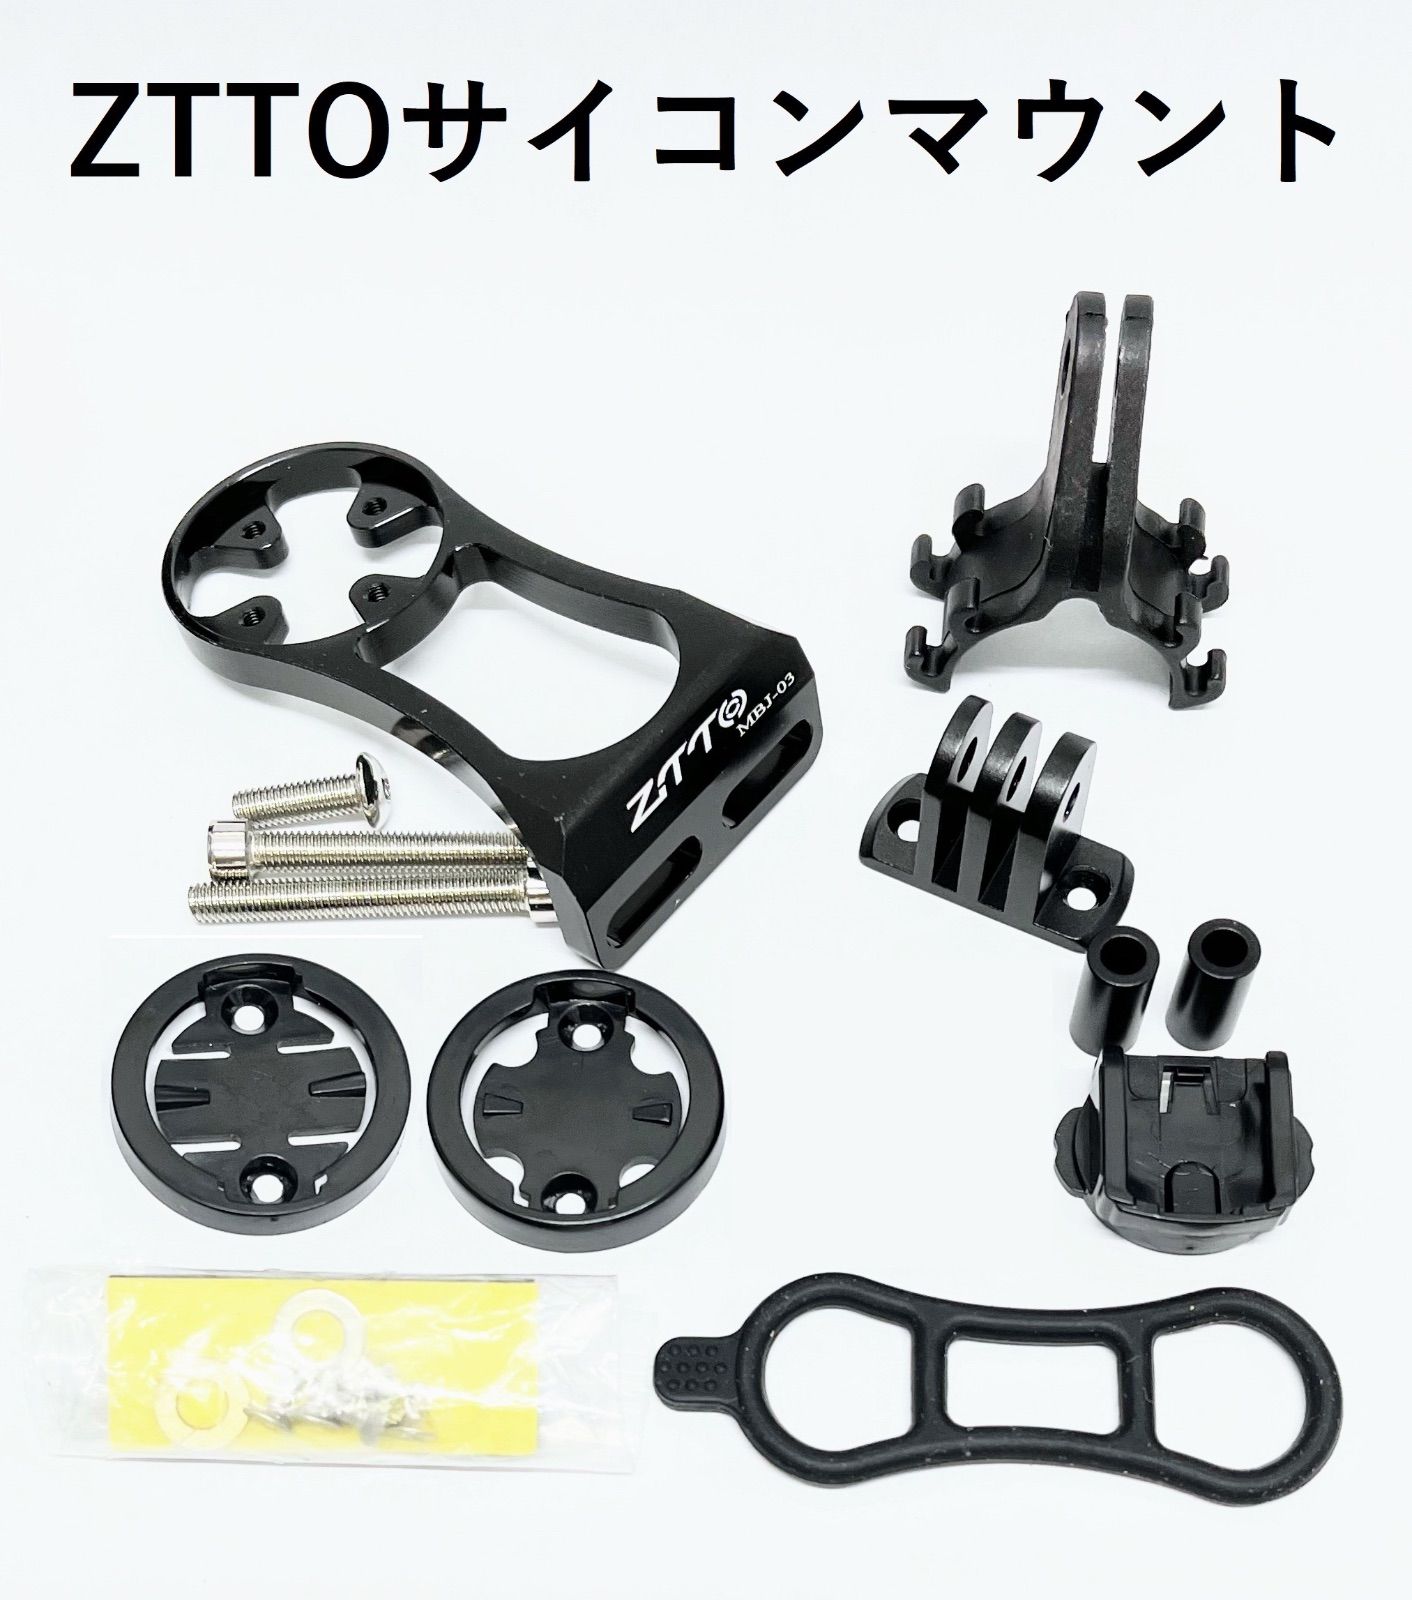 ZTTO サイコン用マウントブラケット シルバー XOSS / GARMIN / Bryton / Cateye